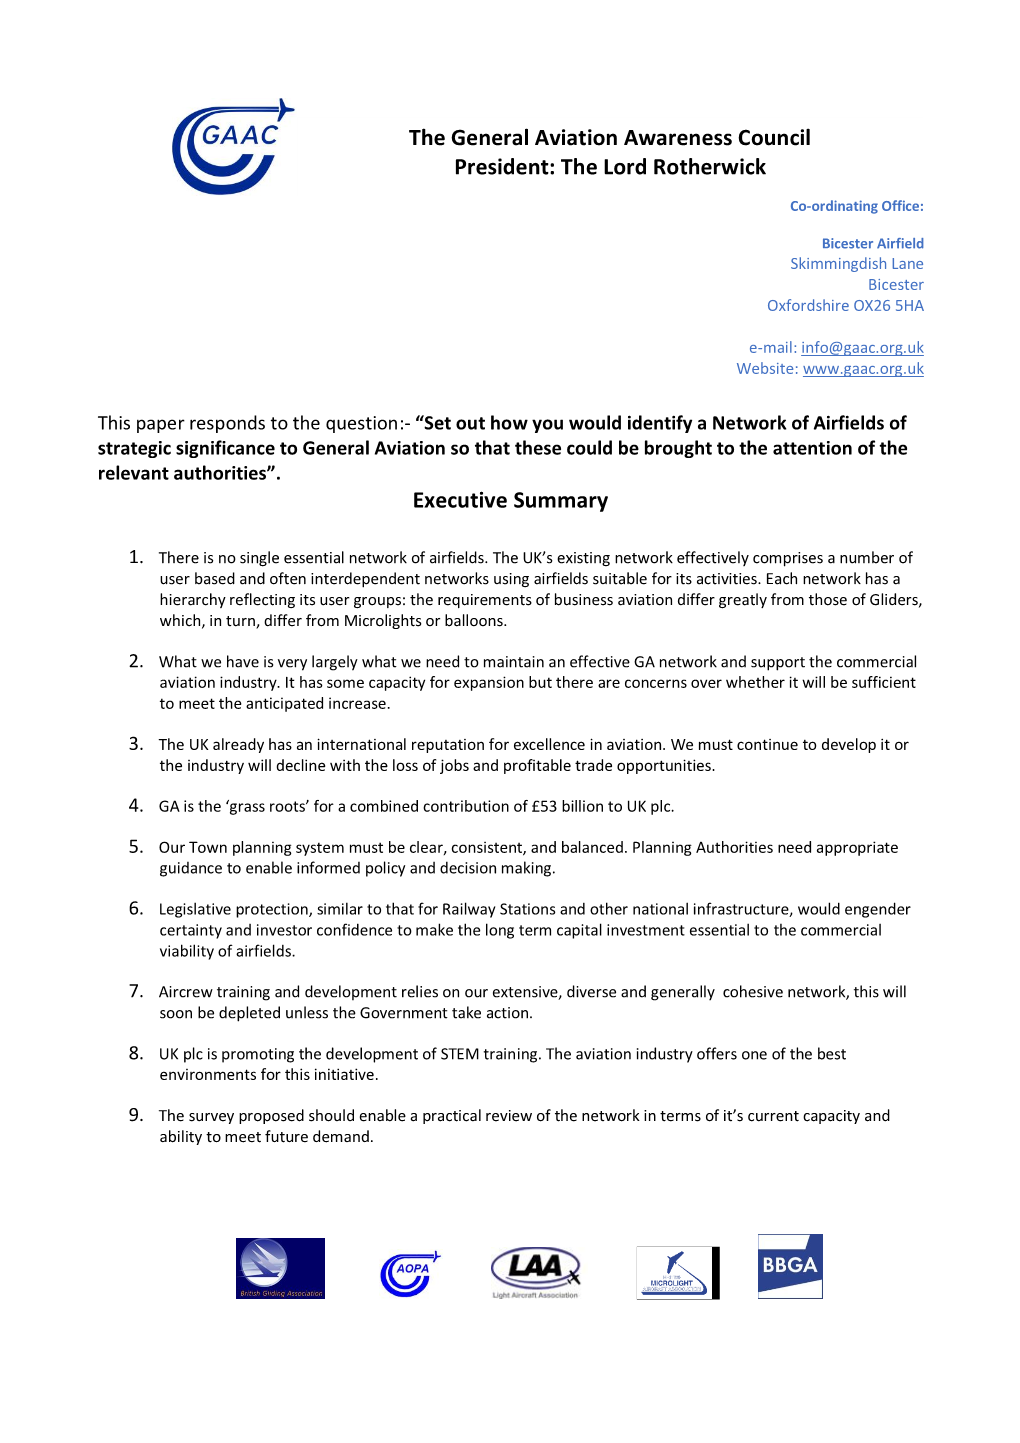 Executive Summary the General Aviation Awareness Council